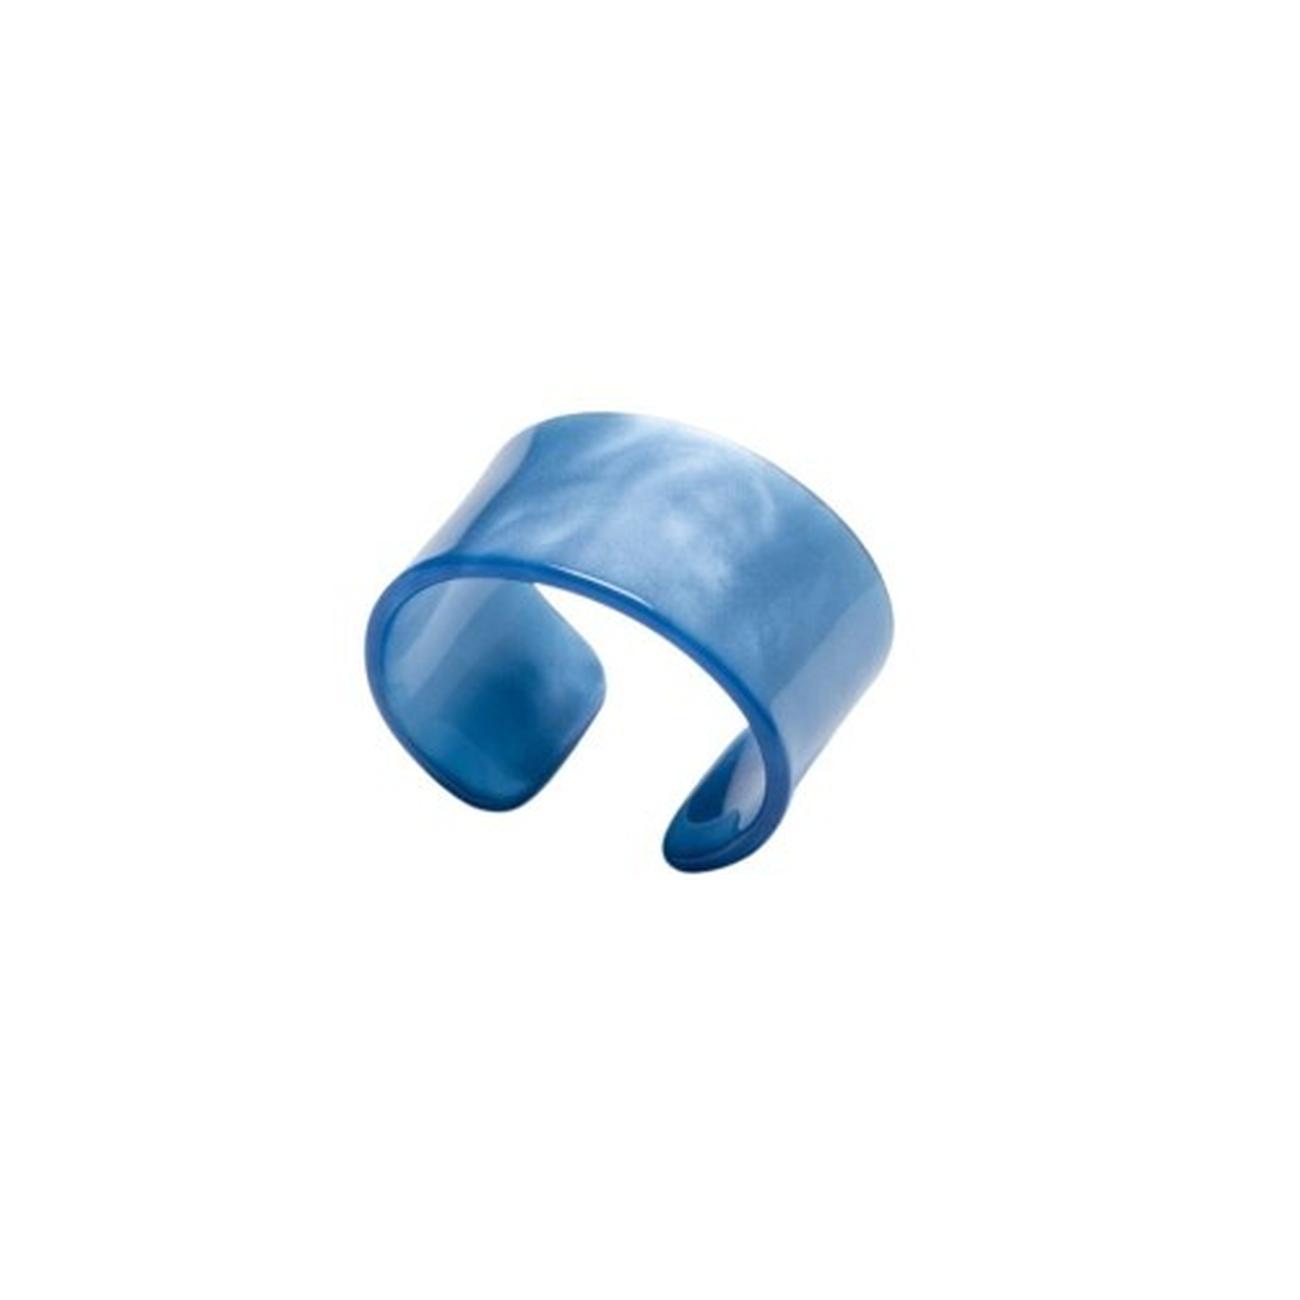 heim-sohne napkin-ring-blue - Heim Sohne Napkin Ring-Blue